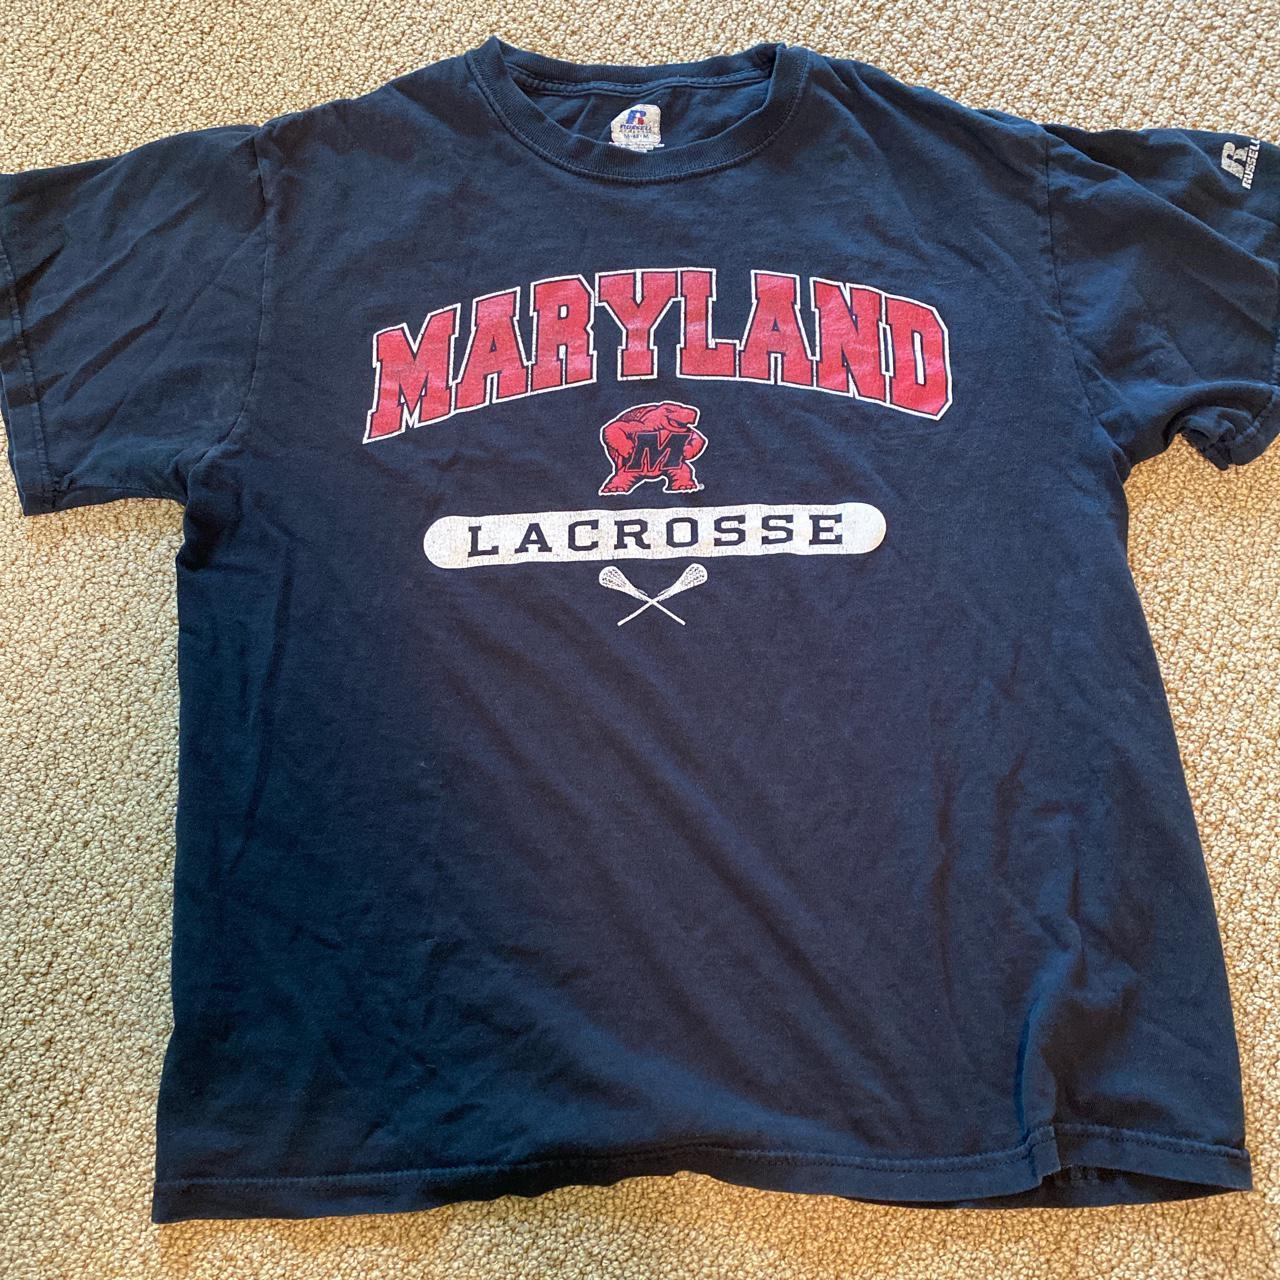 Product Image 1 - Maryland Lacrosse y2k T-shirt 

Lightly